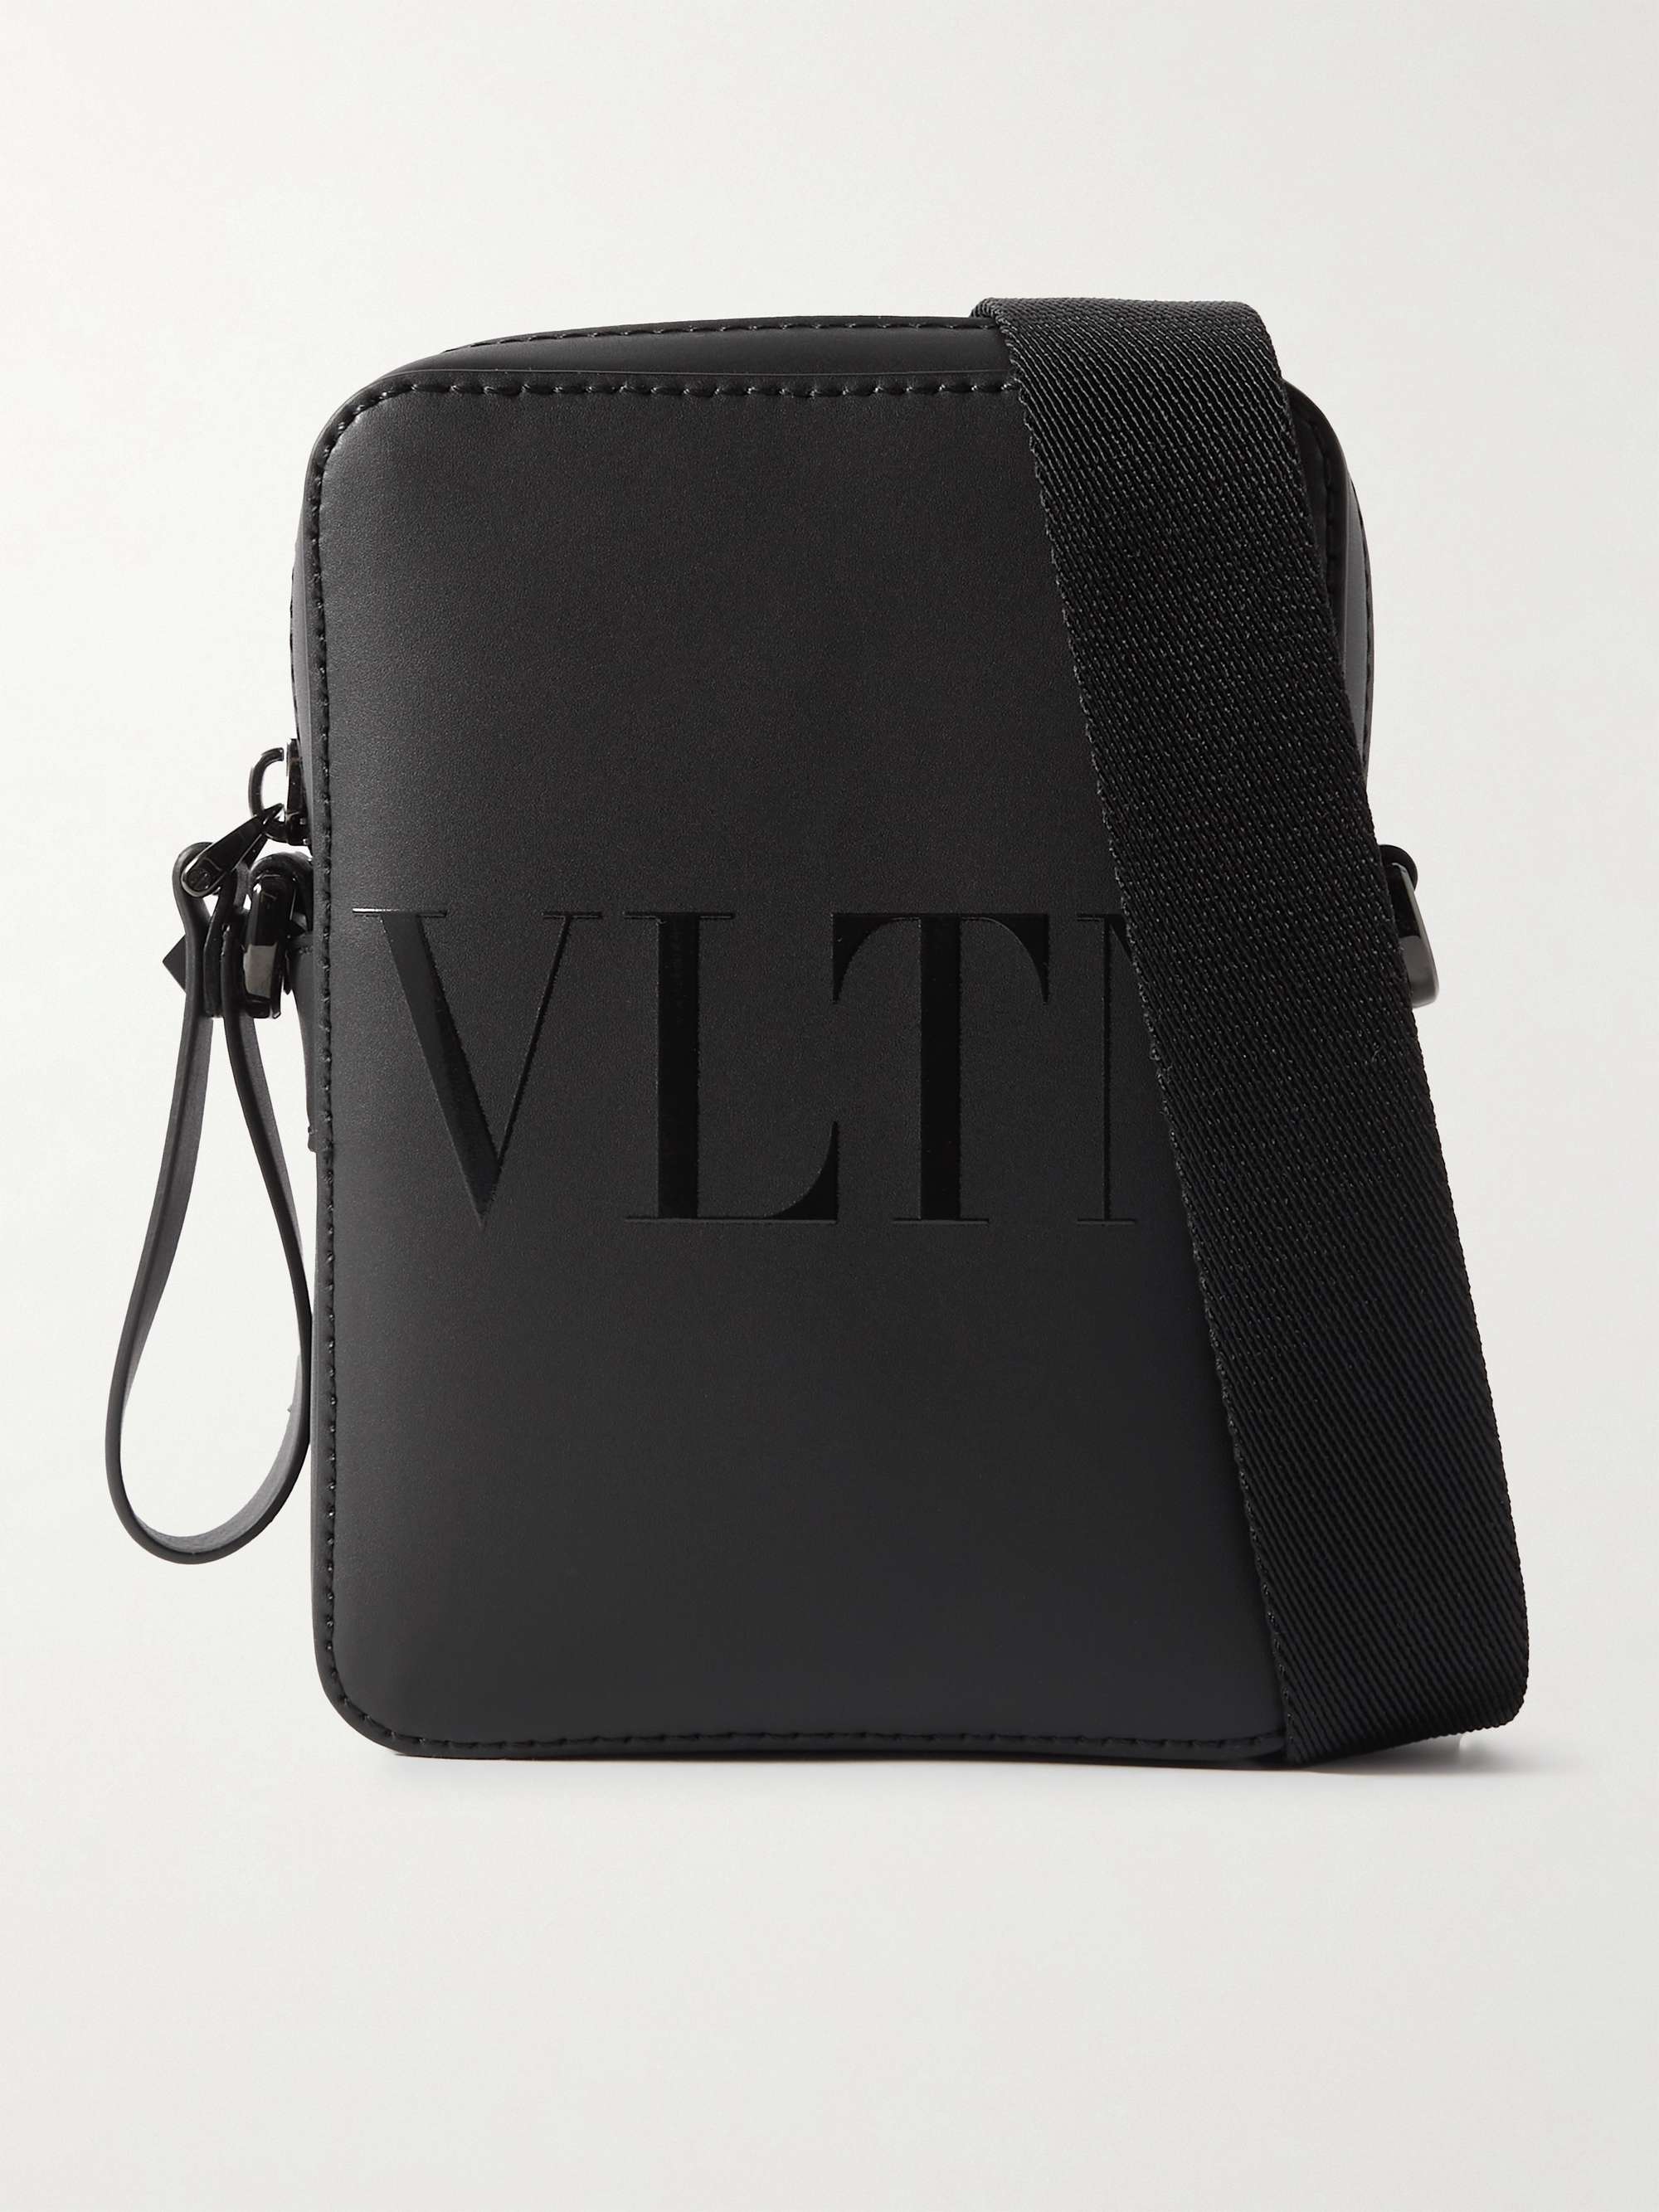 Valentino Garavani Vltn Leather Crossbody Bag